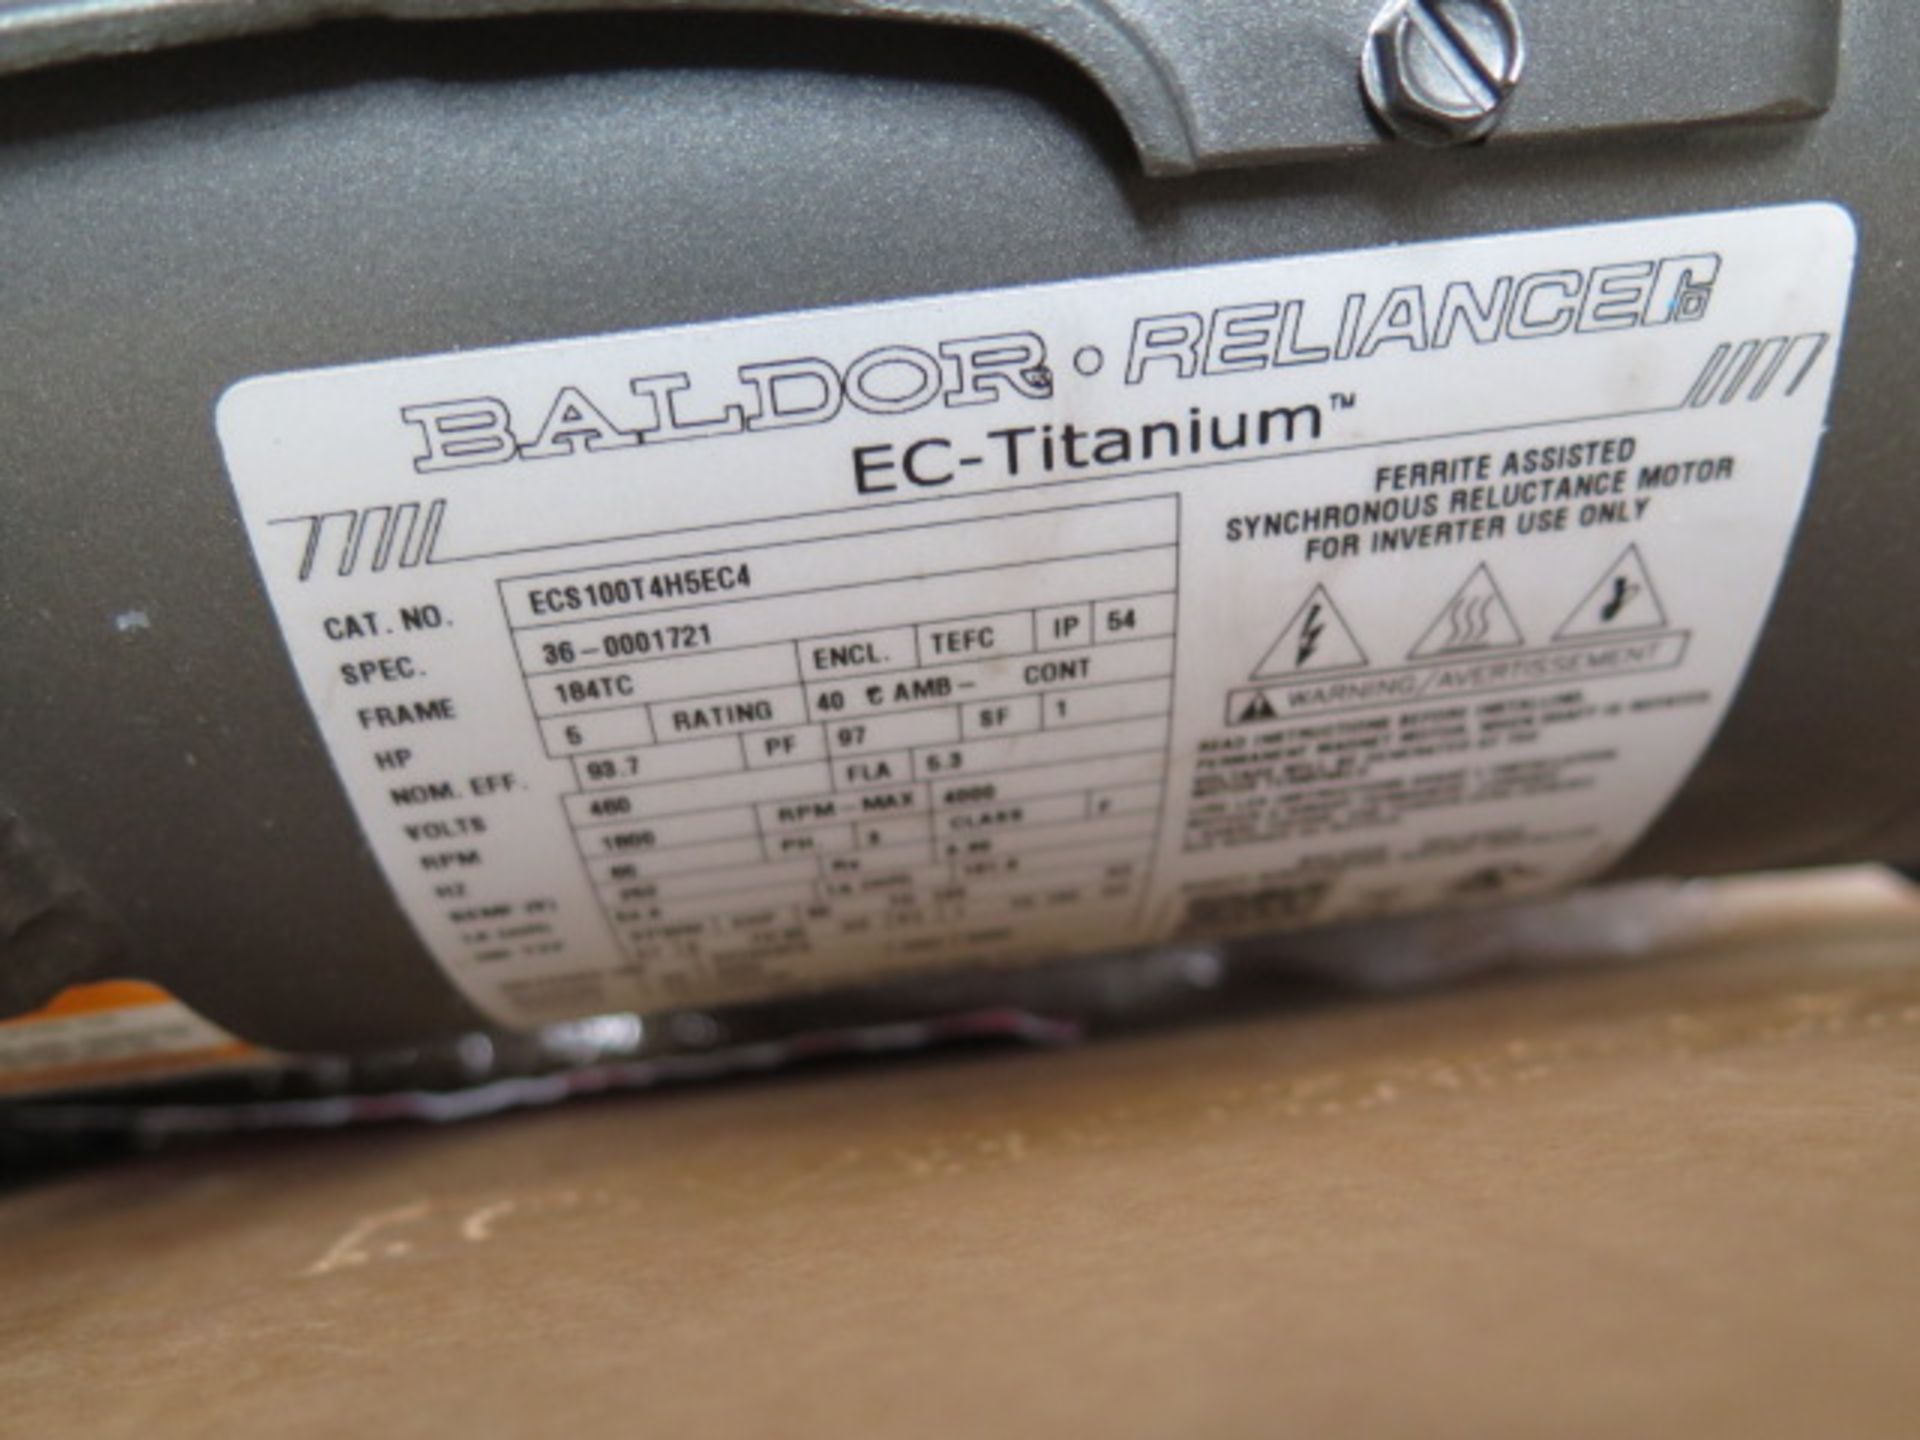 Baldor-Reliance EC-Titanium Series 5Hp Elec Motor w/ Allen Bradley Motor Controller 480V,SOLD AS IS - Image 6 of 7